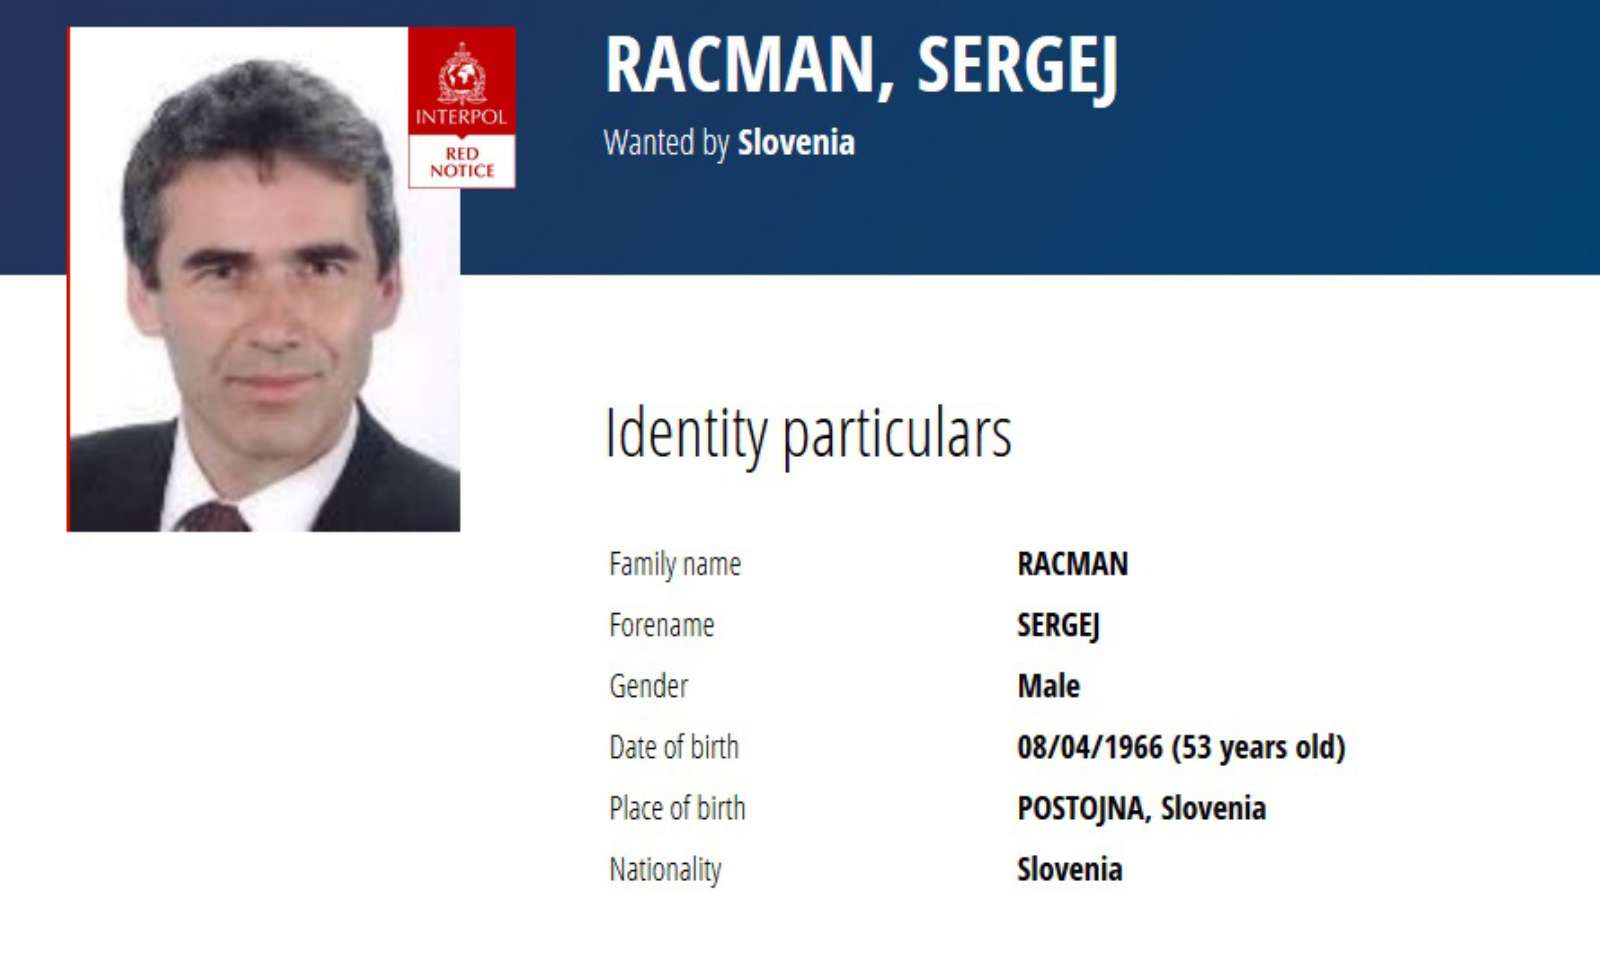 Sergej Racman interpol tiralica